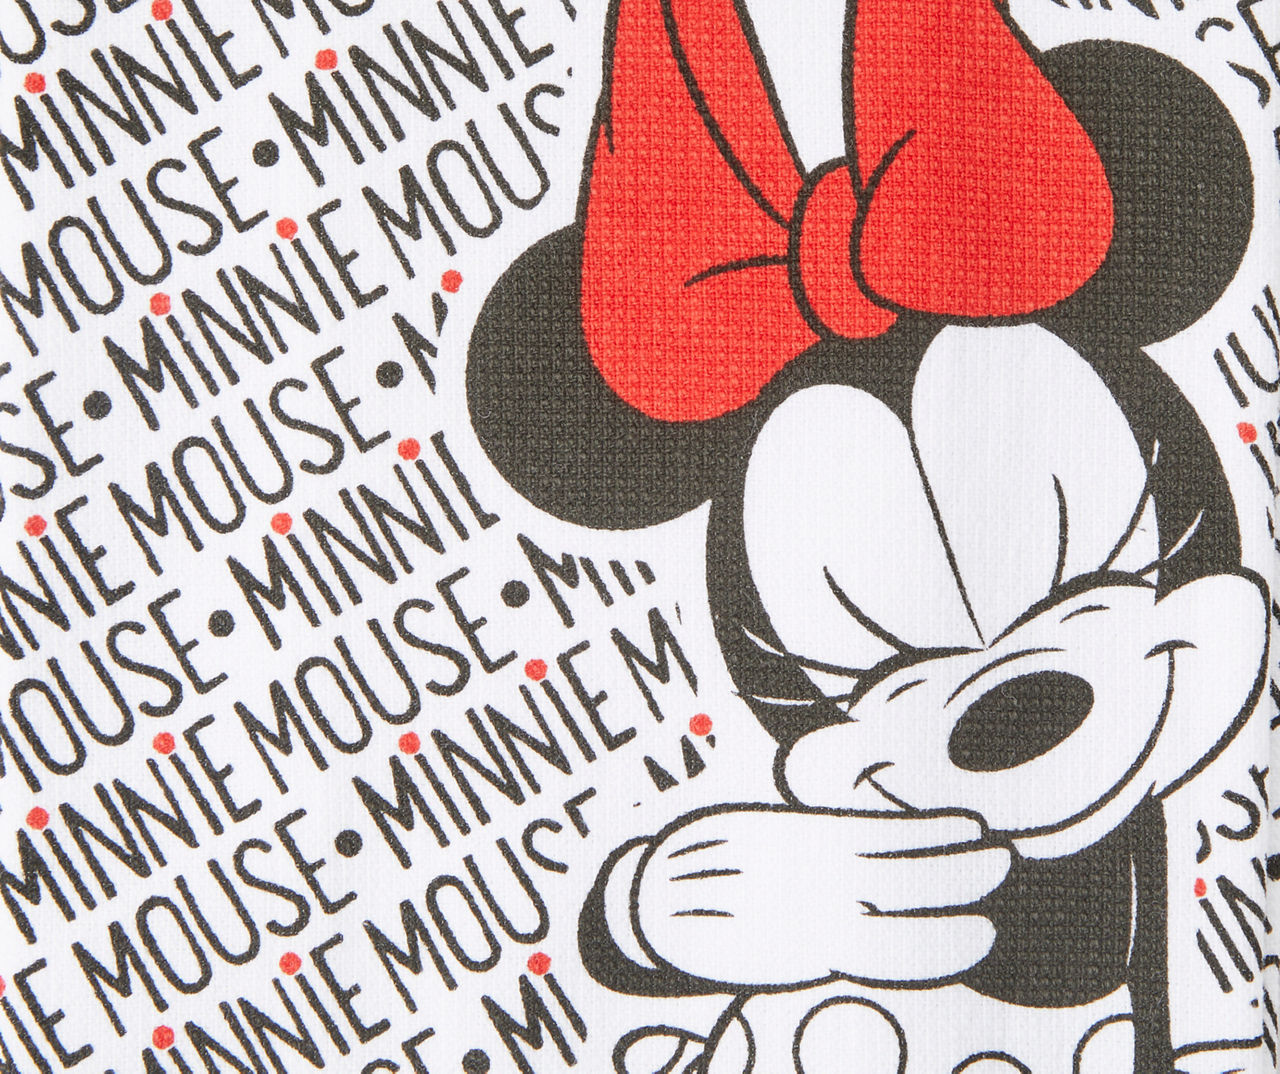  Disney Kitchen Towels (Minnie Mouse) : Home & Kitchen